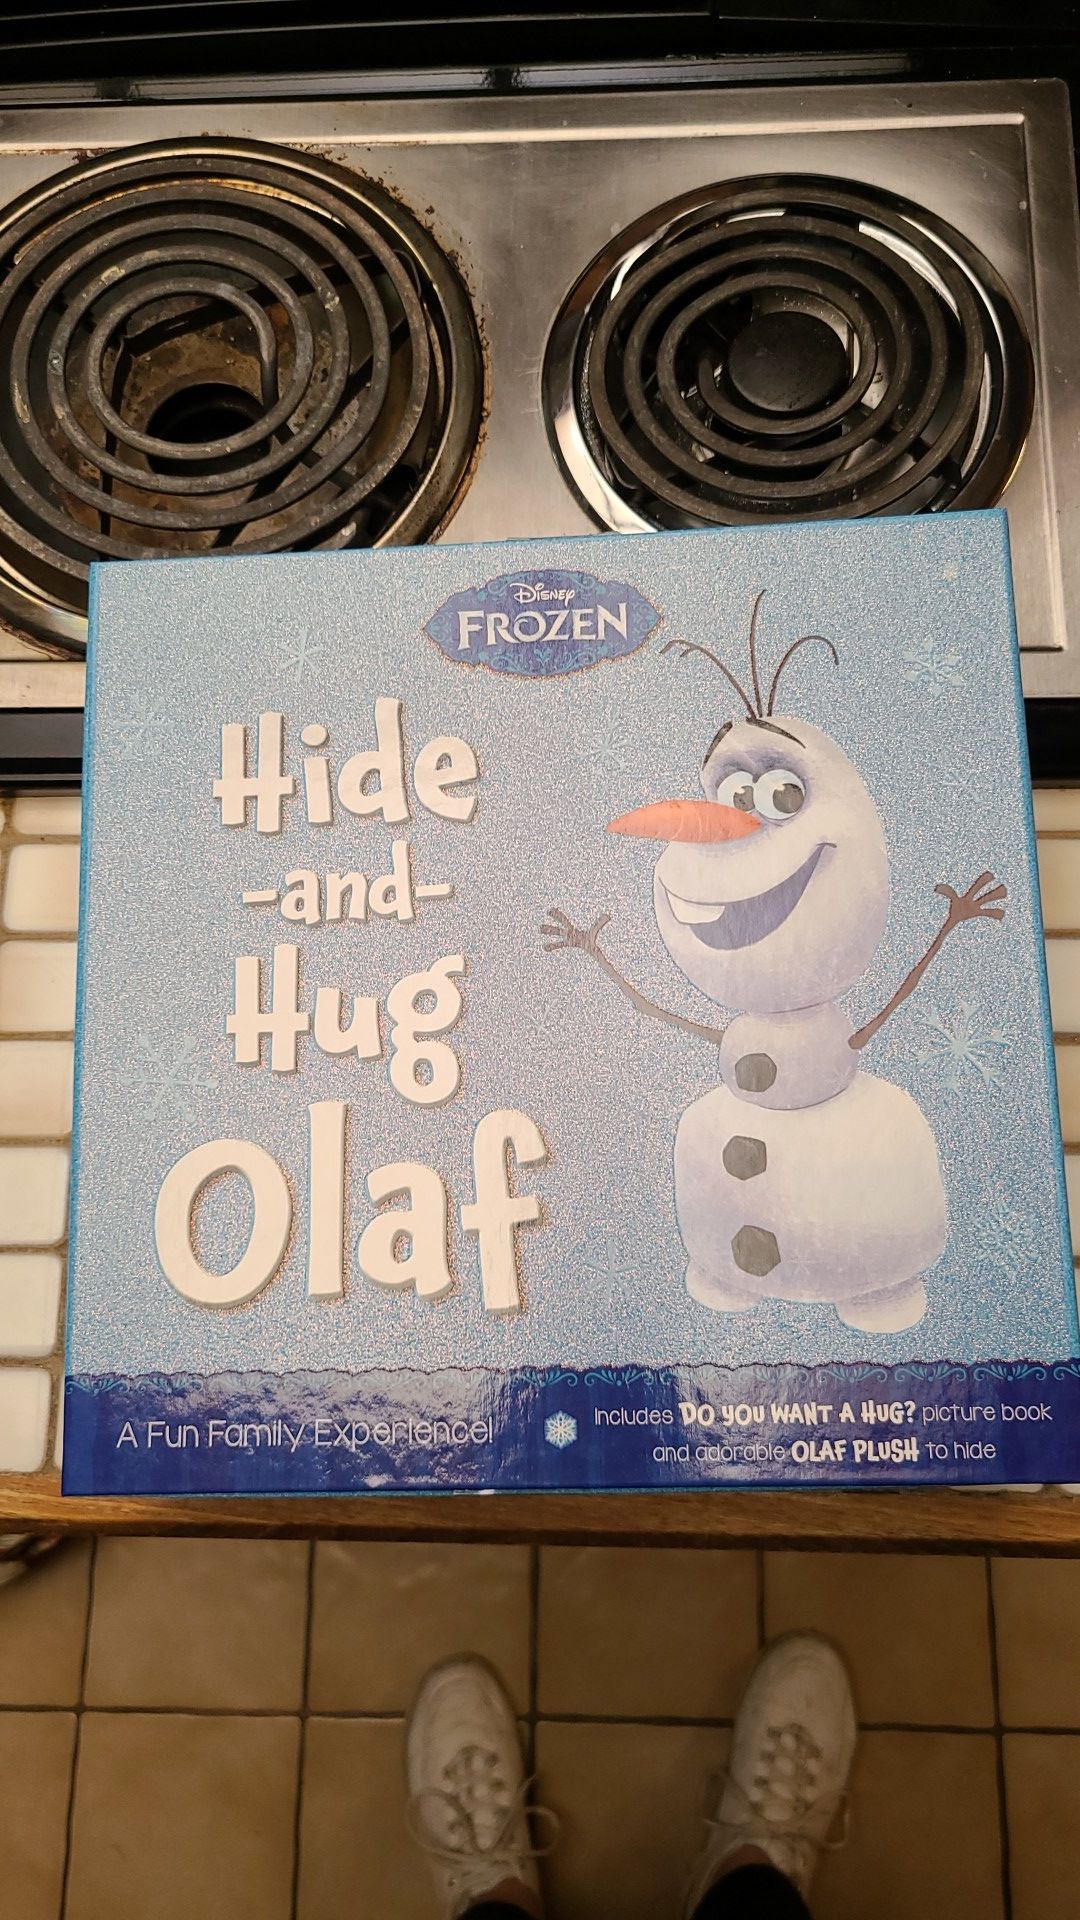 Disney Frozen Hide-and-Hug olaf